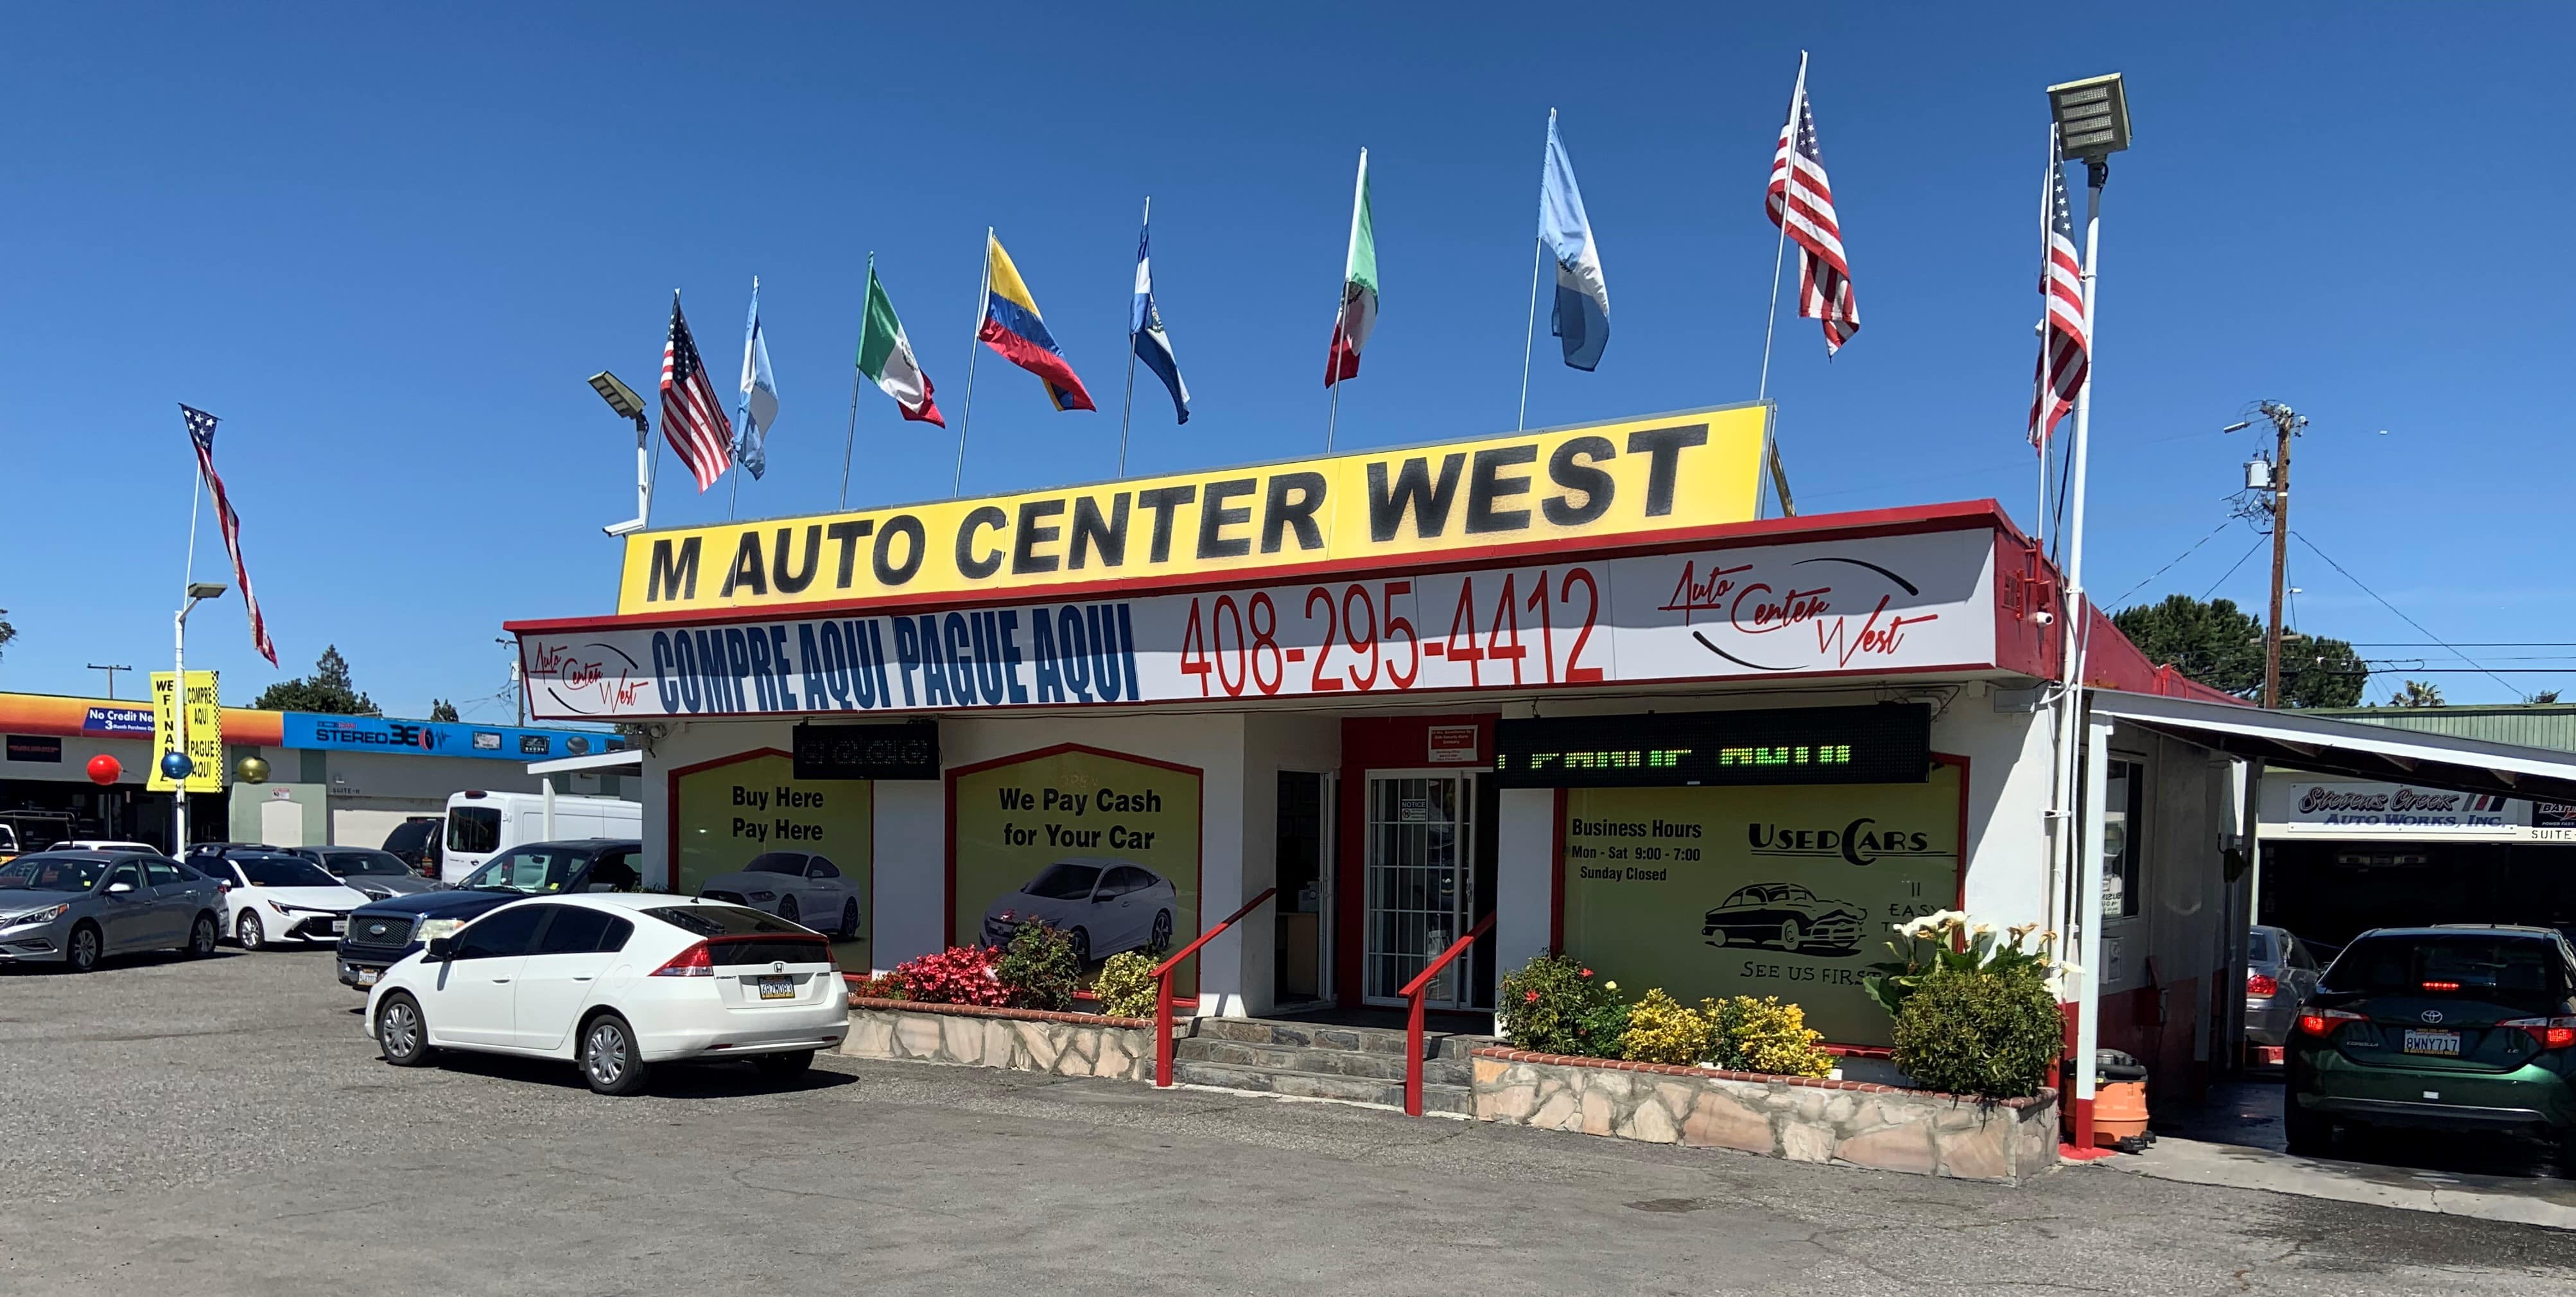 M Auto Center West - San Jose (CA 95128), US, jeep dealership